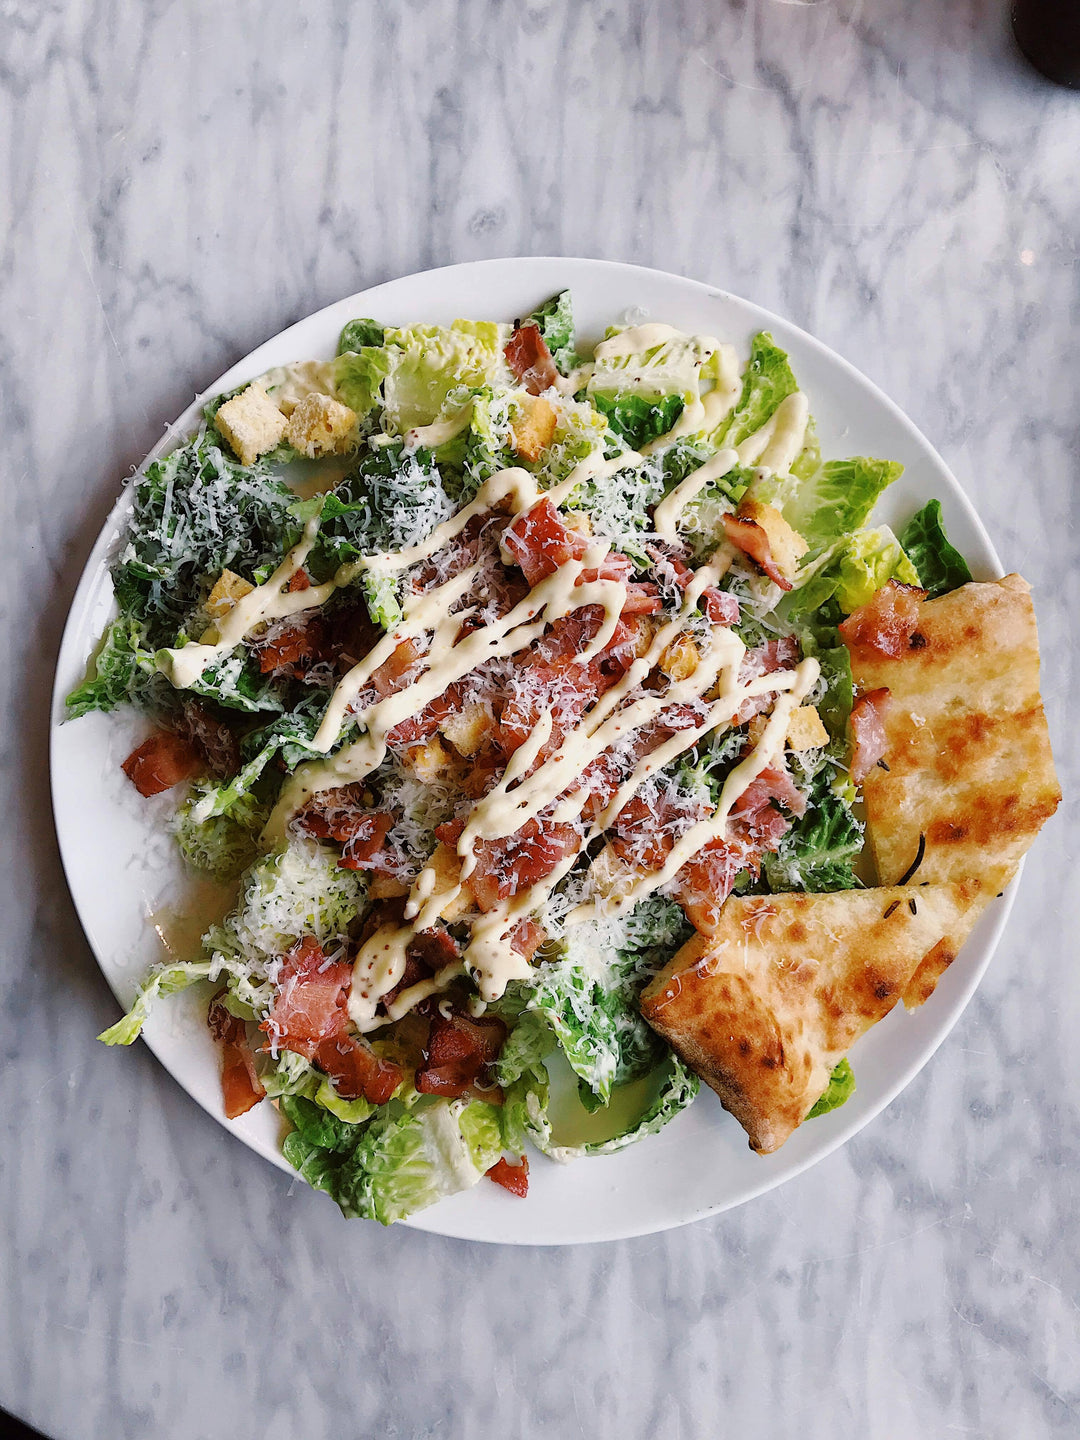 Fitness Buffs' Favorite: Caesar Salad with a Papaya Extract Twist